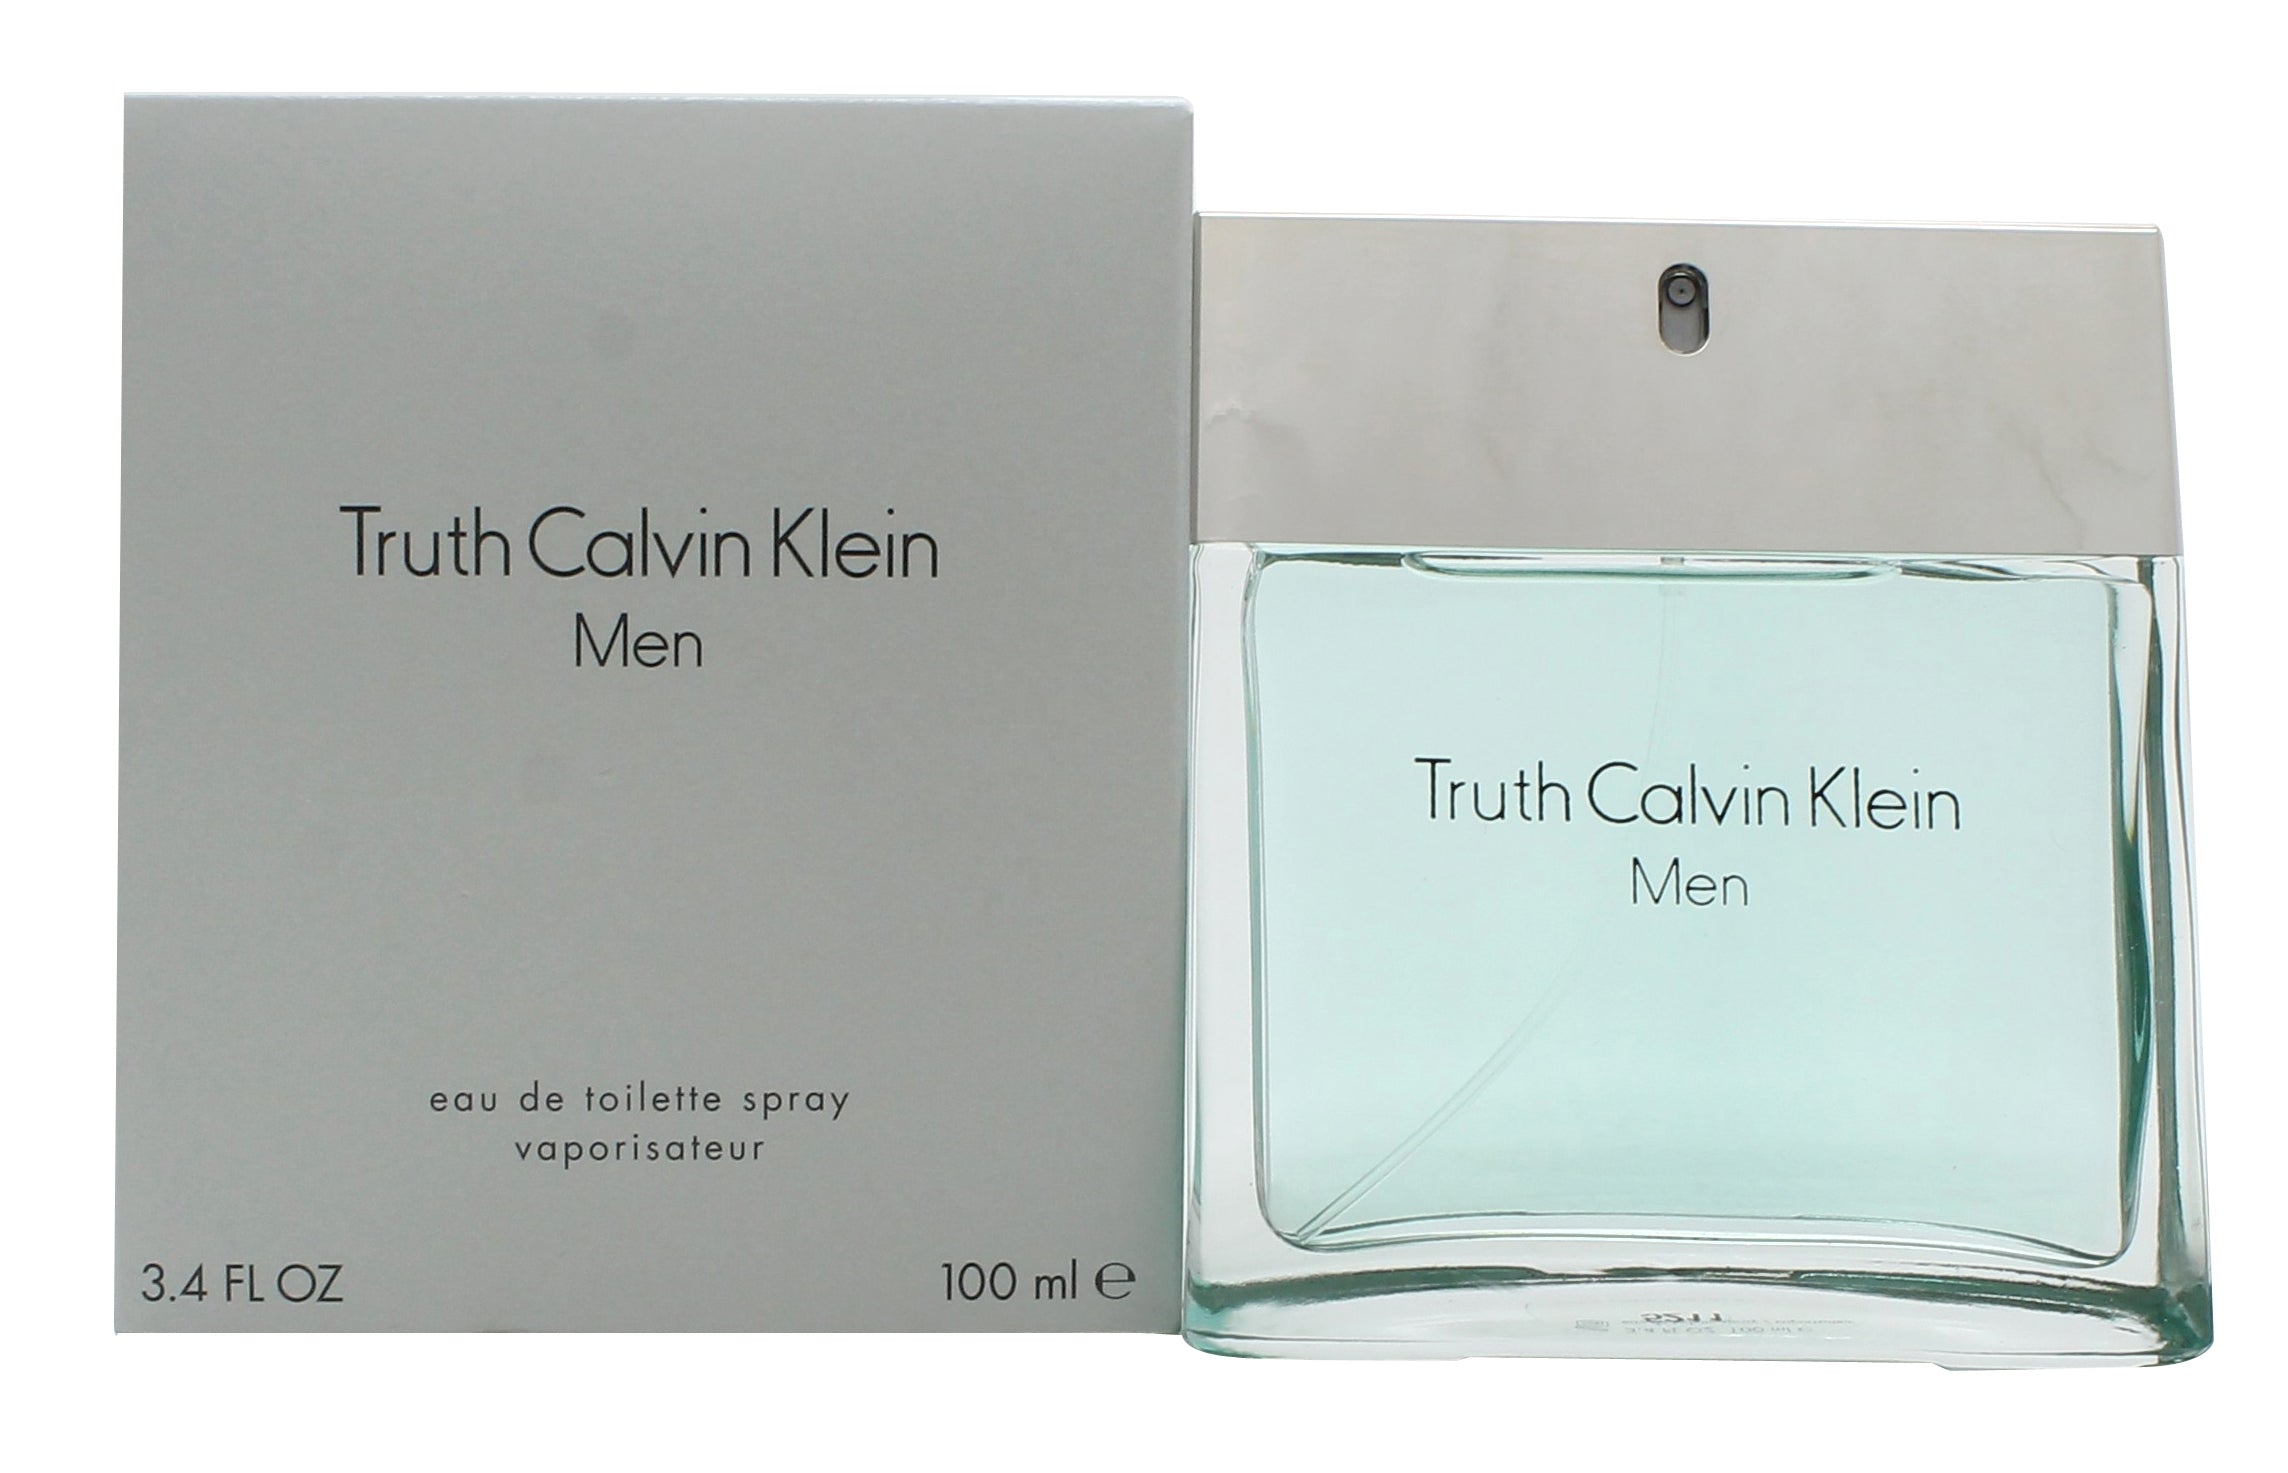 View Calvin Klein Truth Eau de Toilette 100ml Spray information